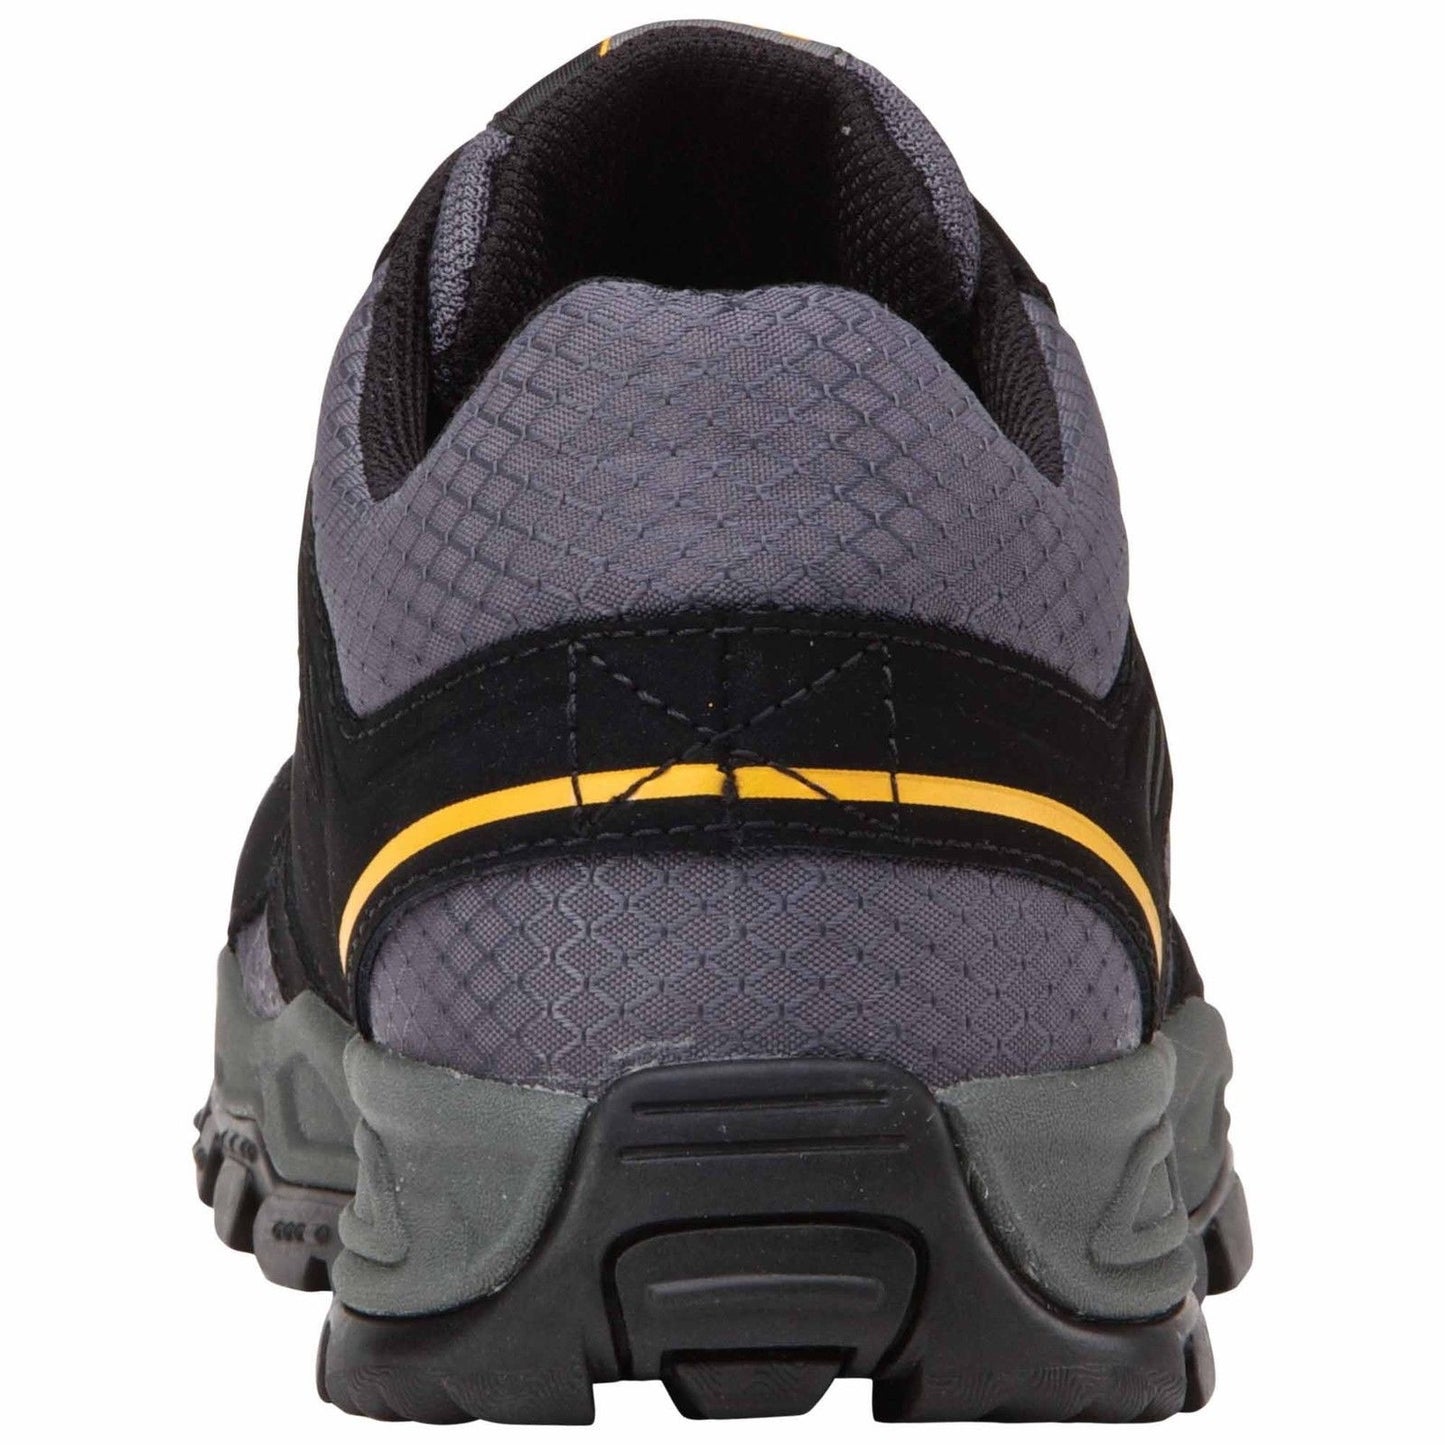 5.11 Versatile All Terrain Ranger Shoes - Mens Low Top OrthoLite® Tactical Boots